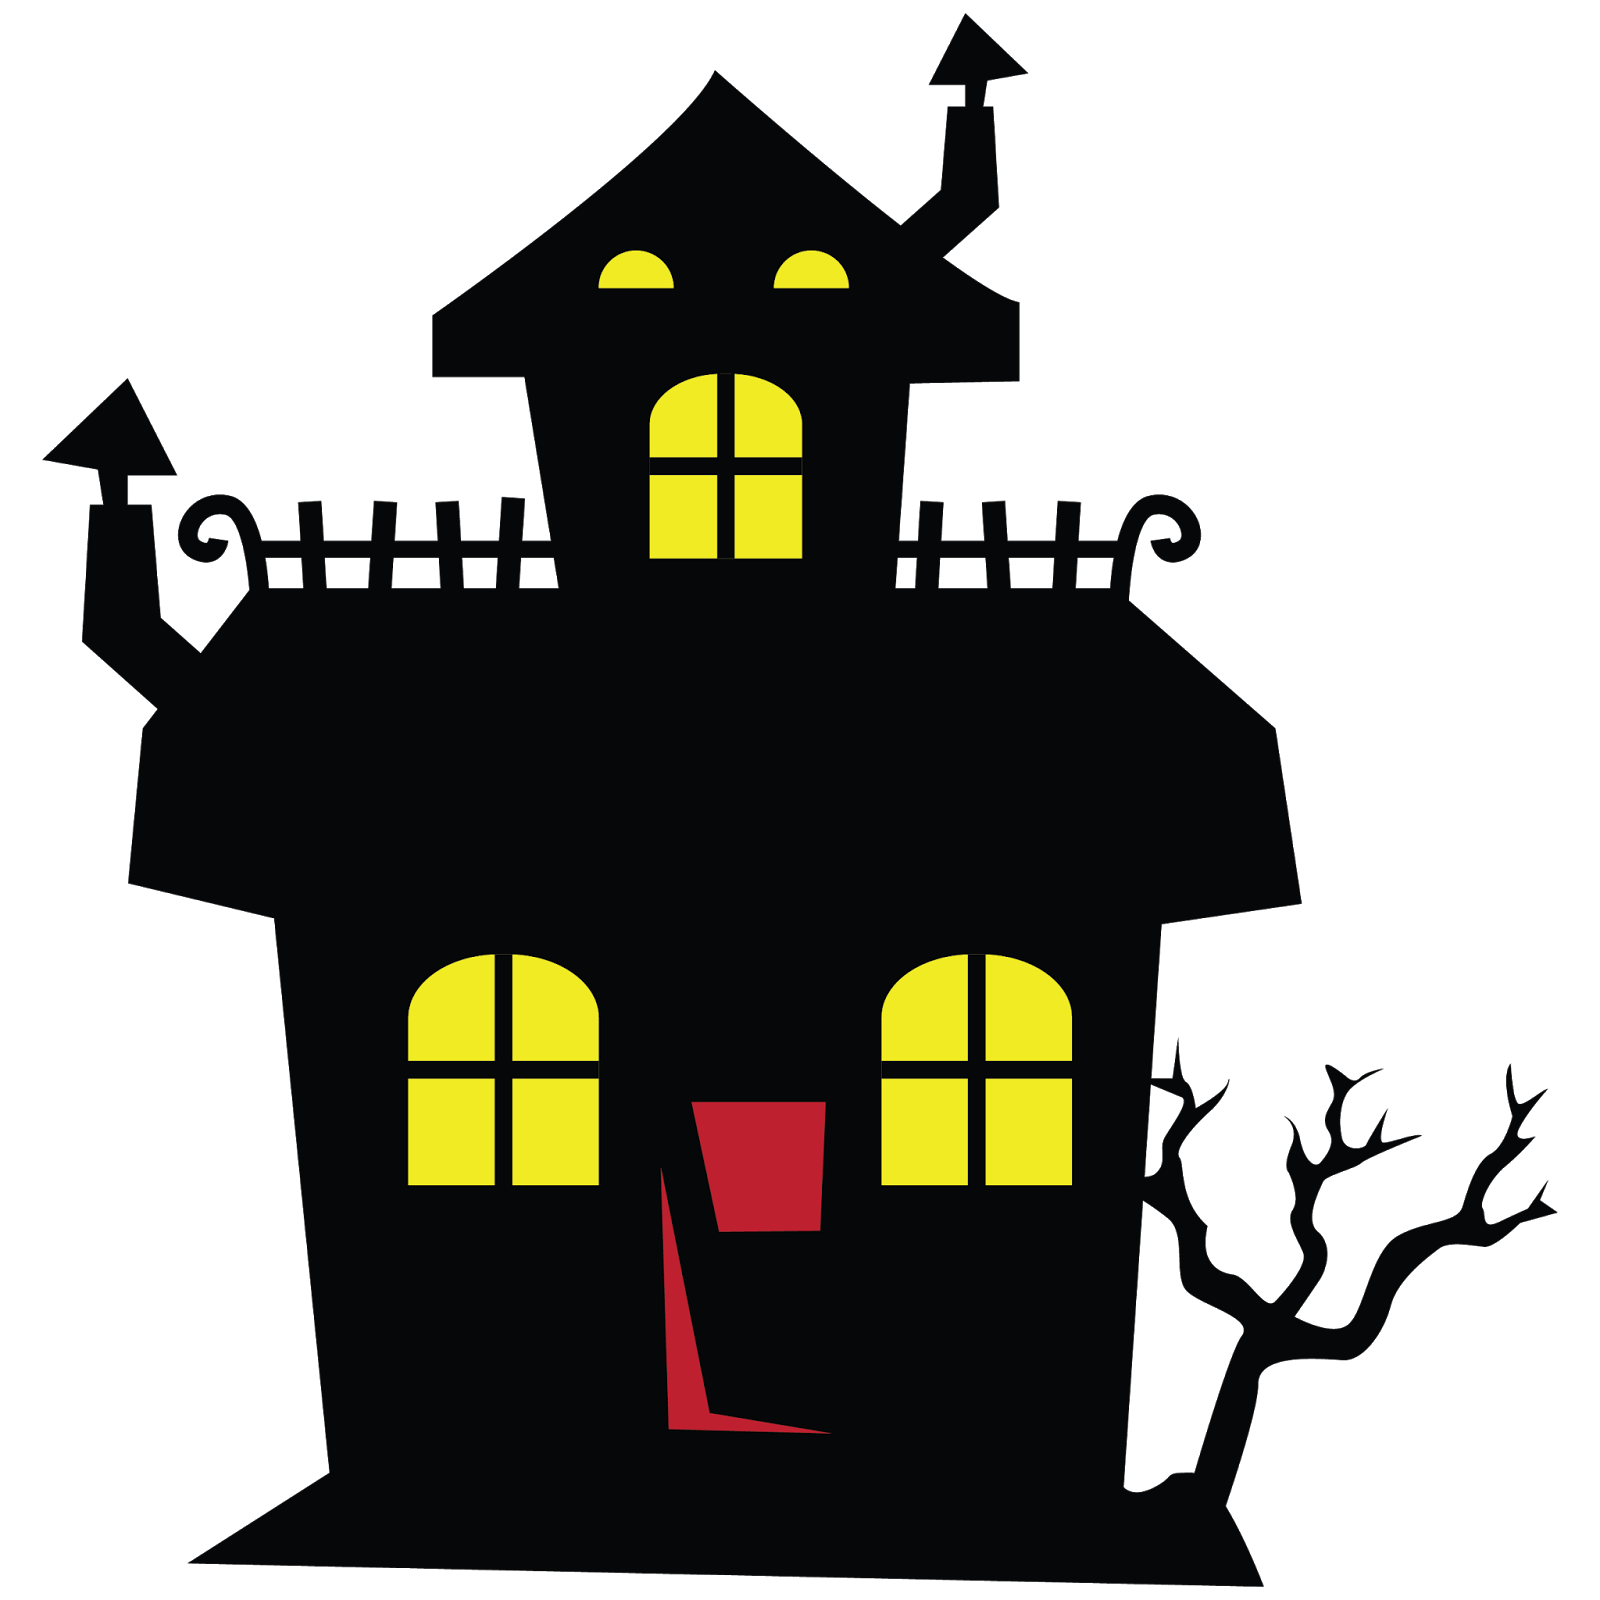 Free Haunted House Halloween 